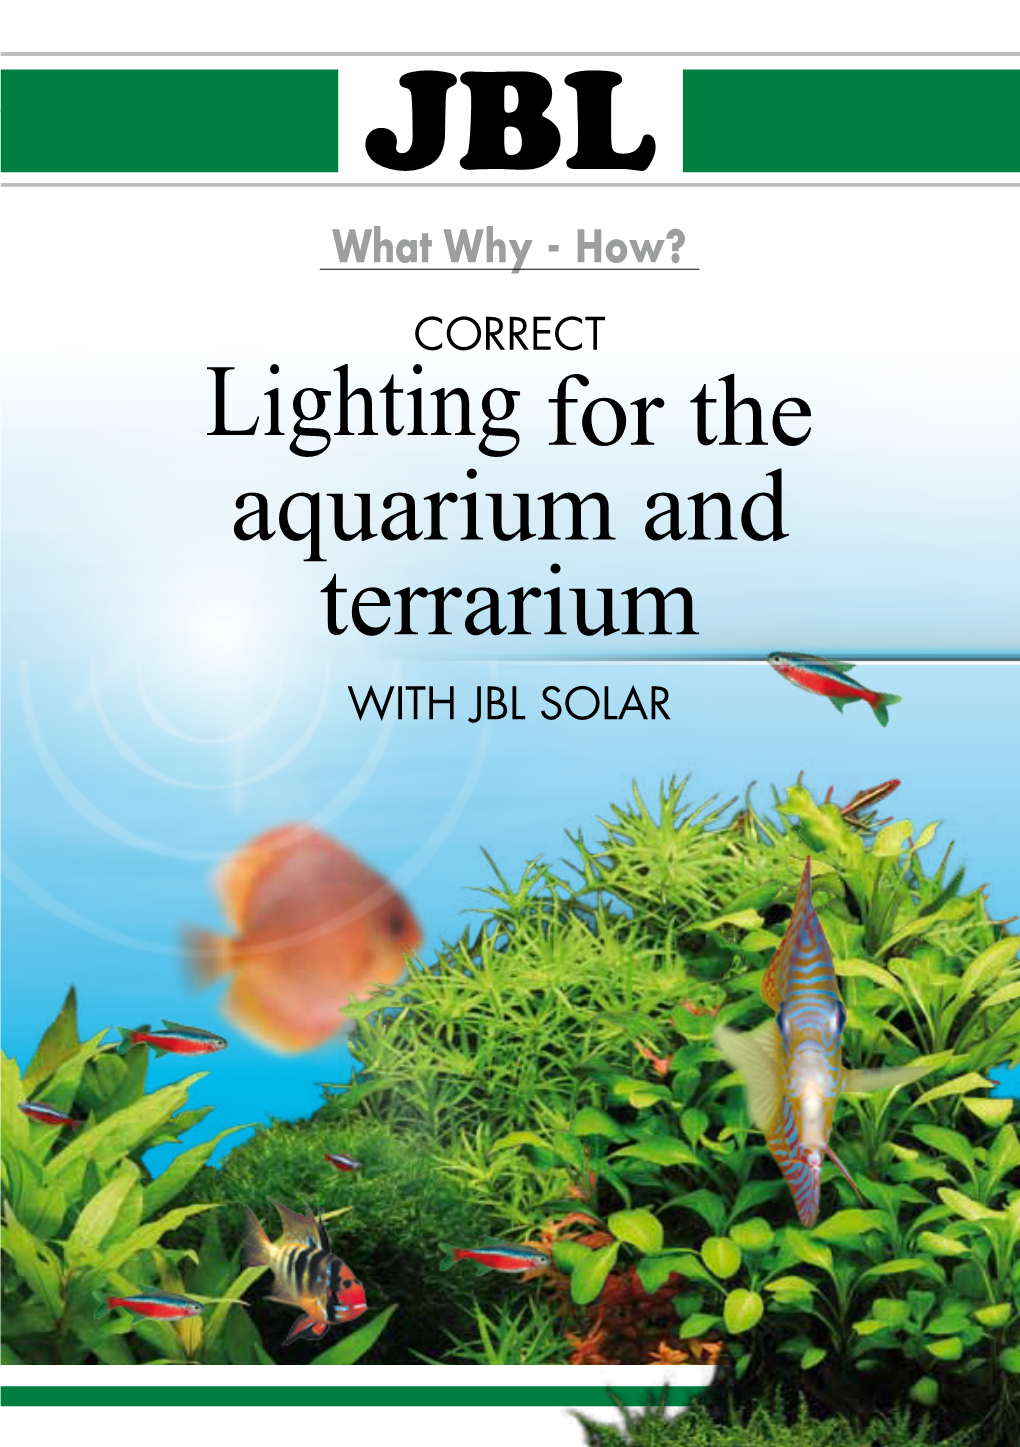 Lighting for the Aquarium and Terrarium with JBL SOLAR Content Page